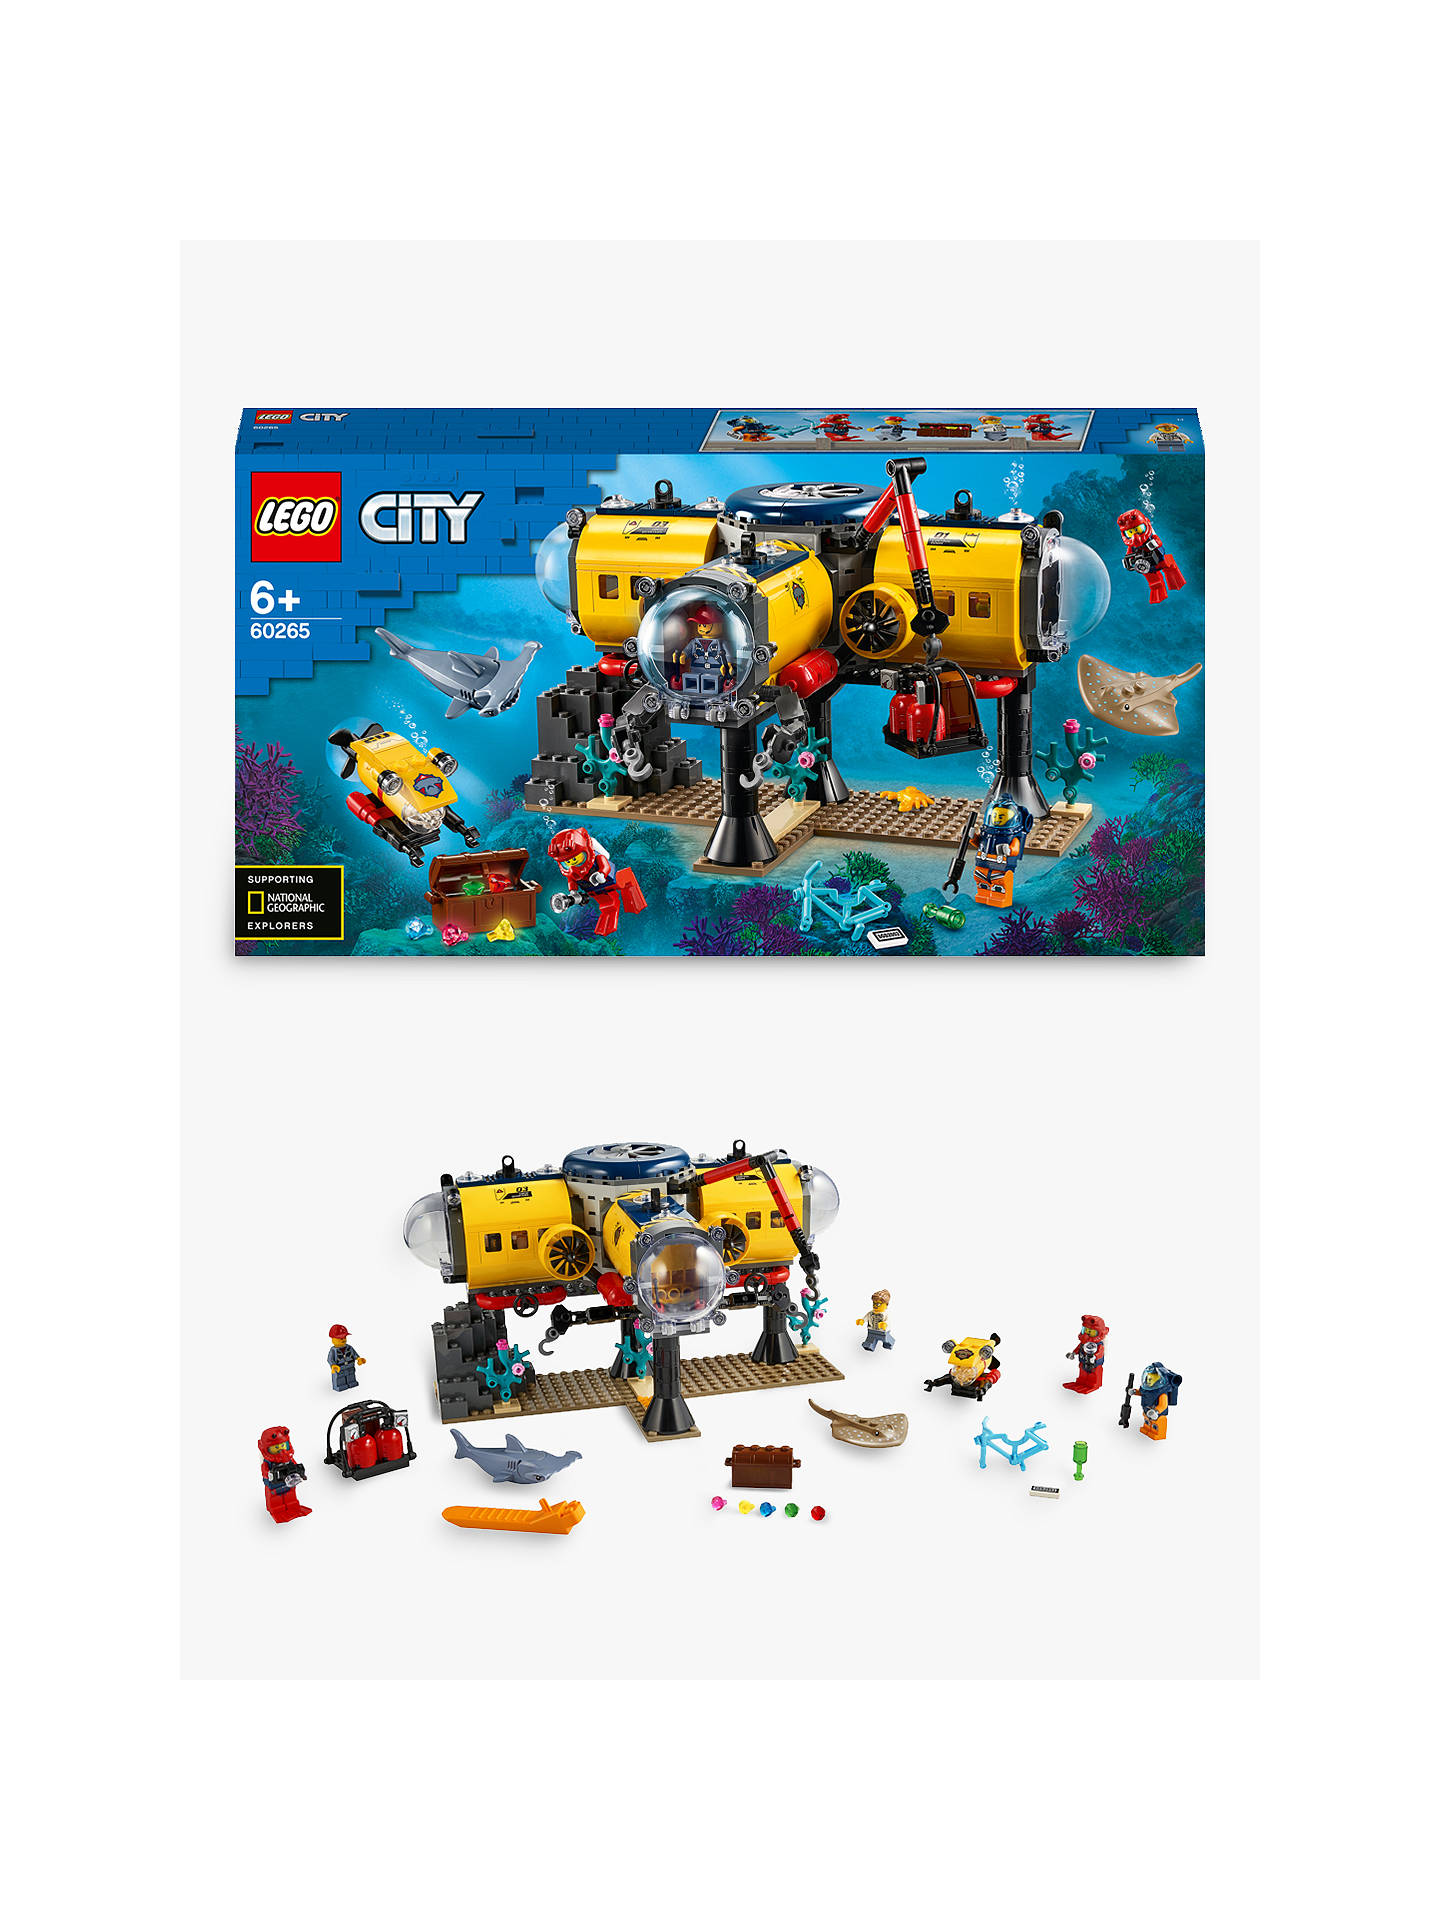 LEGO City 60265 Ocean Exploration Base at John Lewis